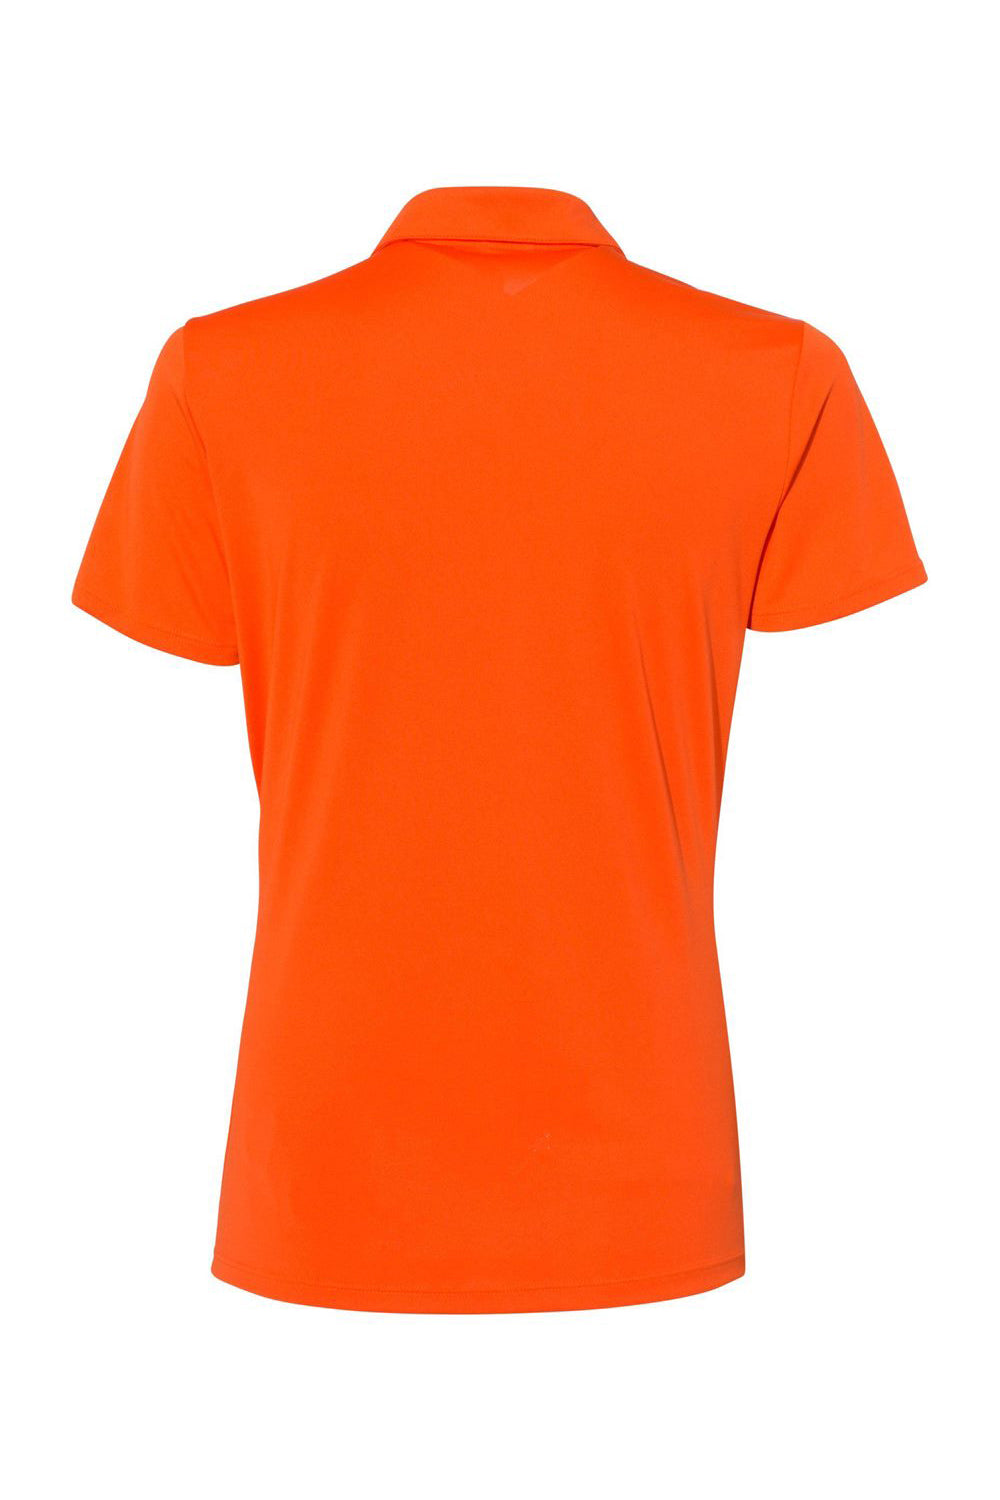 Adidas A231 Womens Performance Short Sleeve Polo Shirt Orange Flat Back